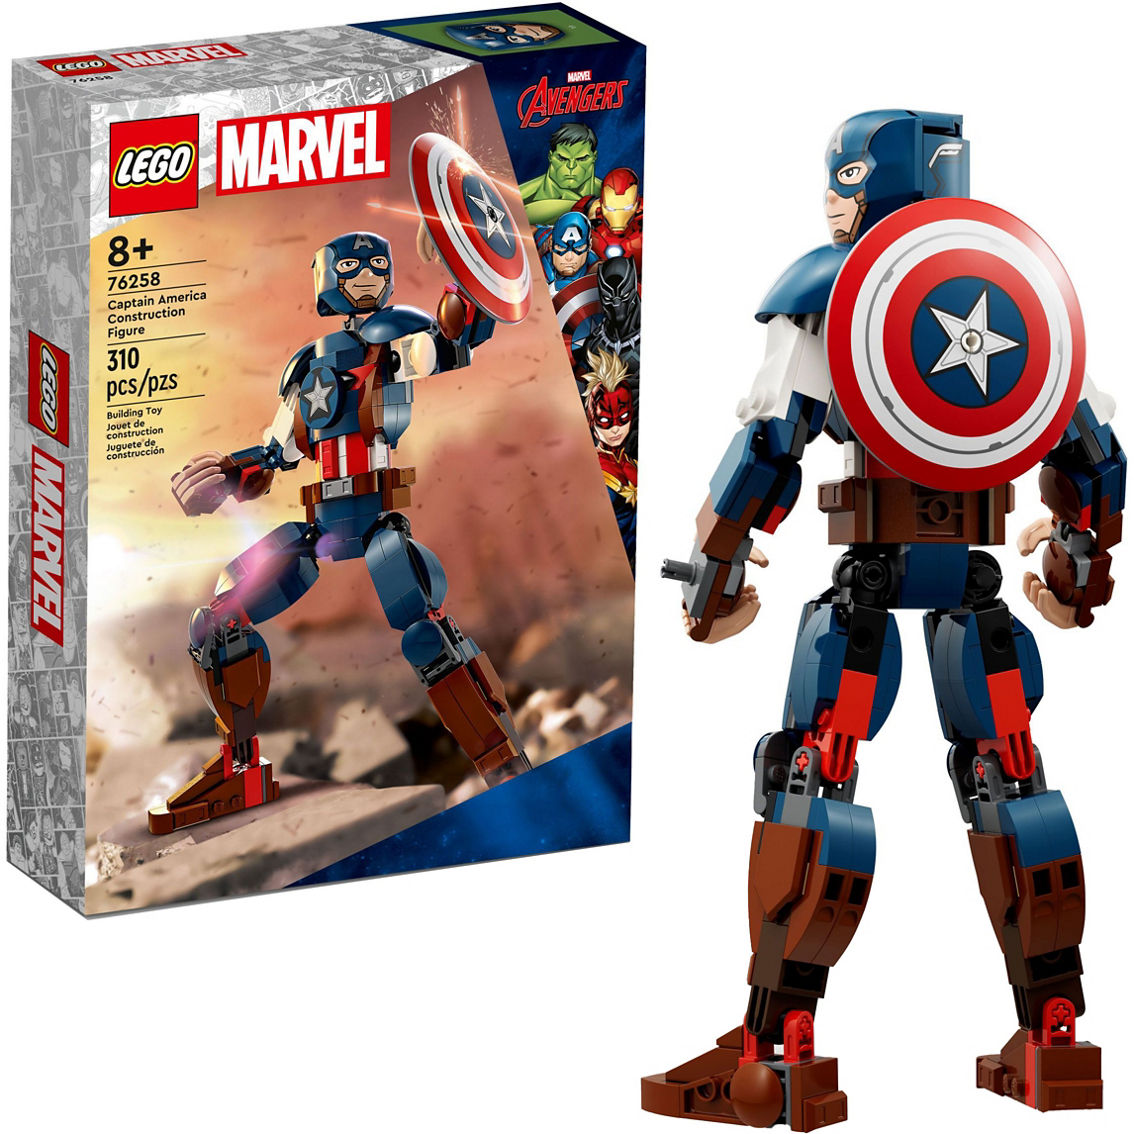 LEGO Super Heroes Captain America Construction Figure 76258 - Image 3 of 10